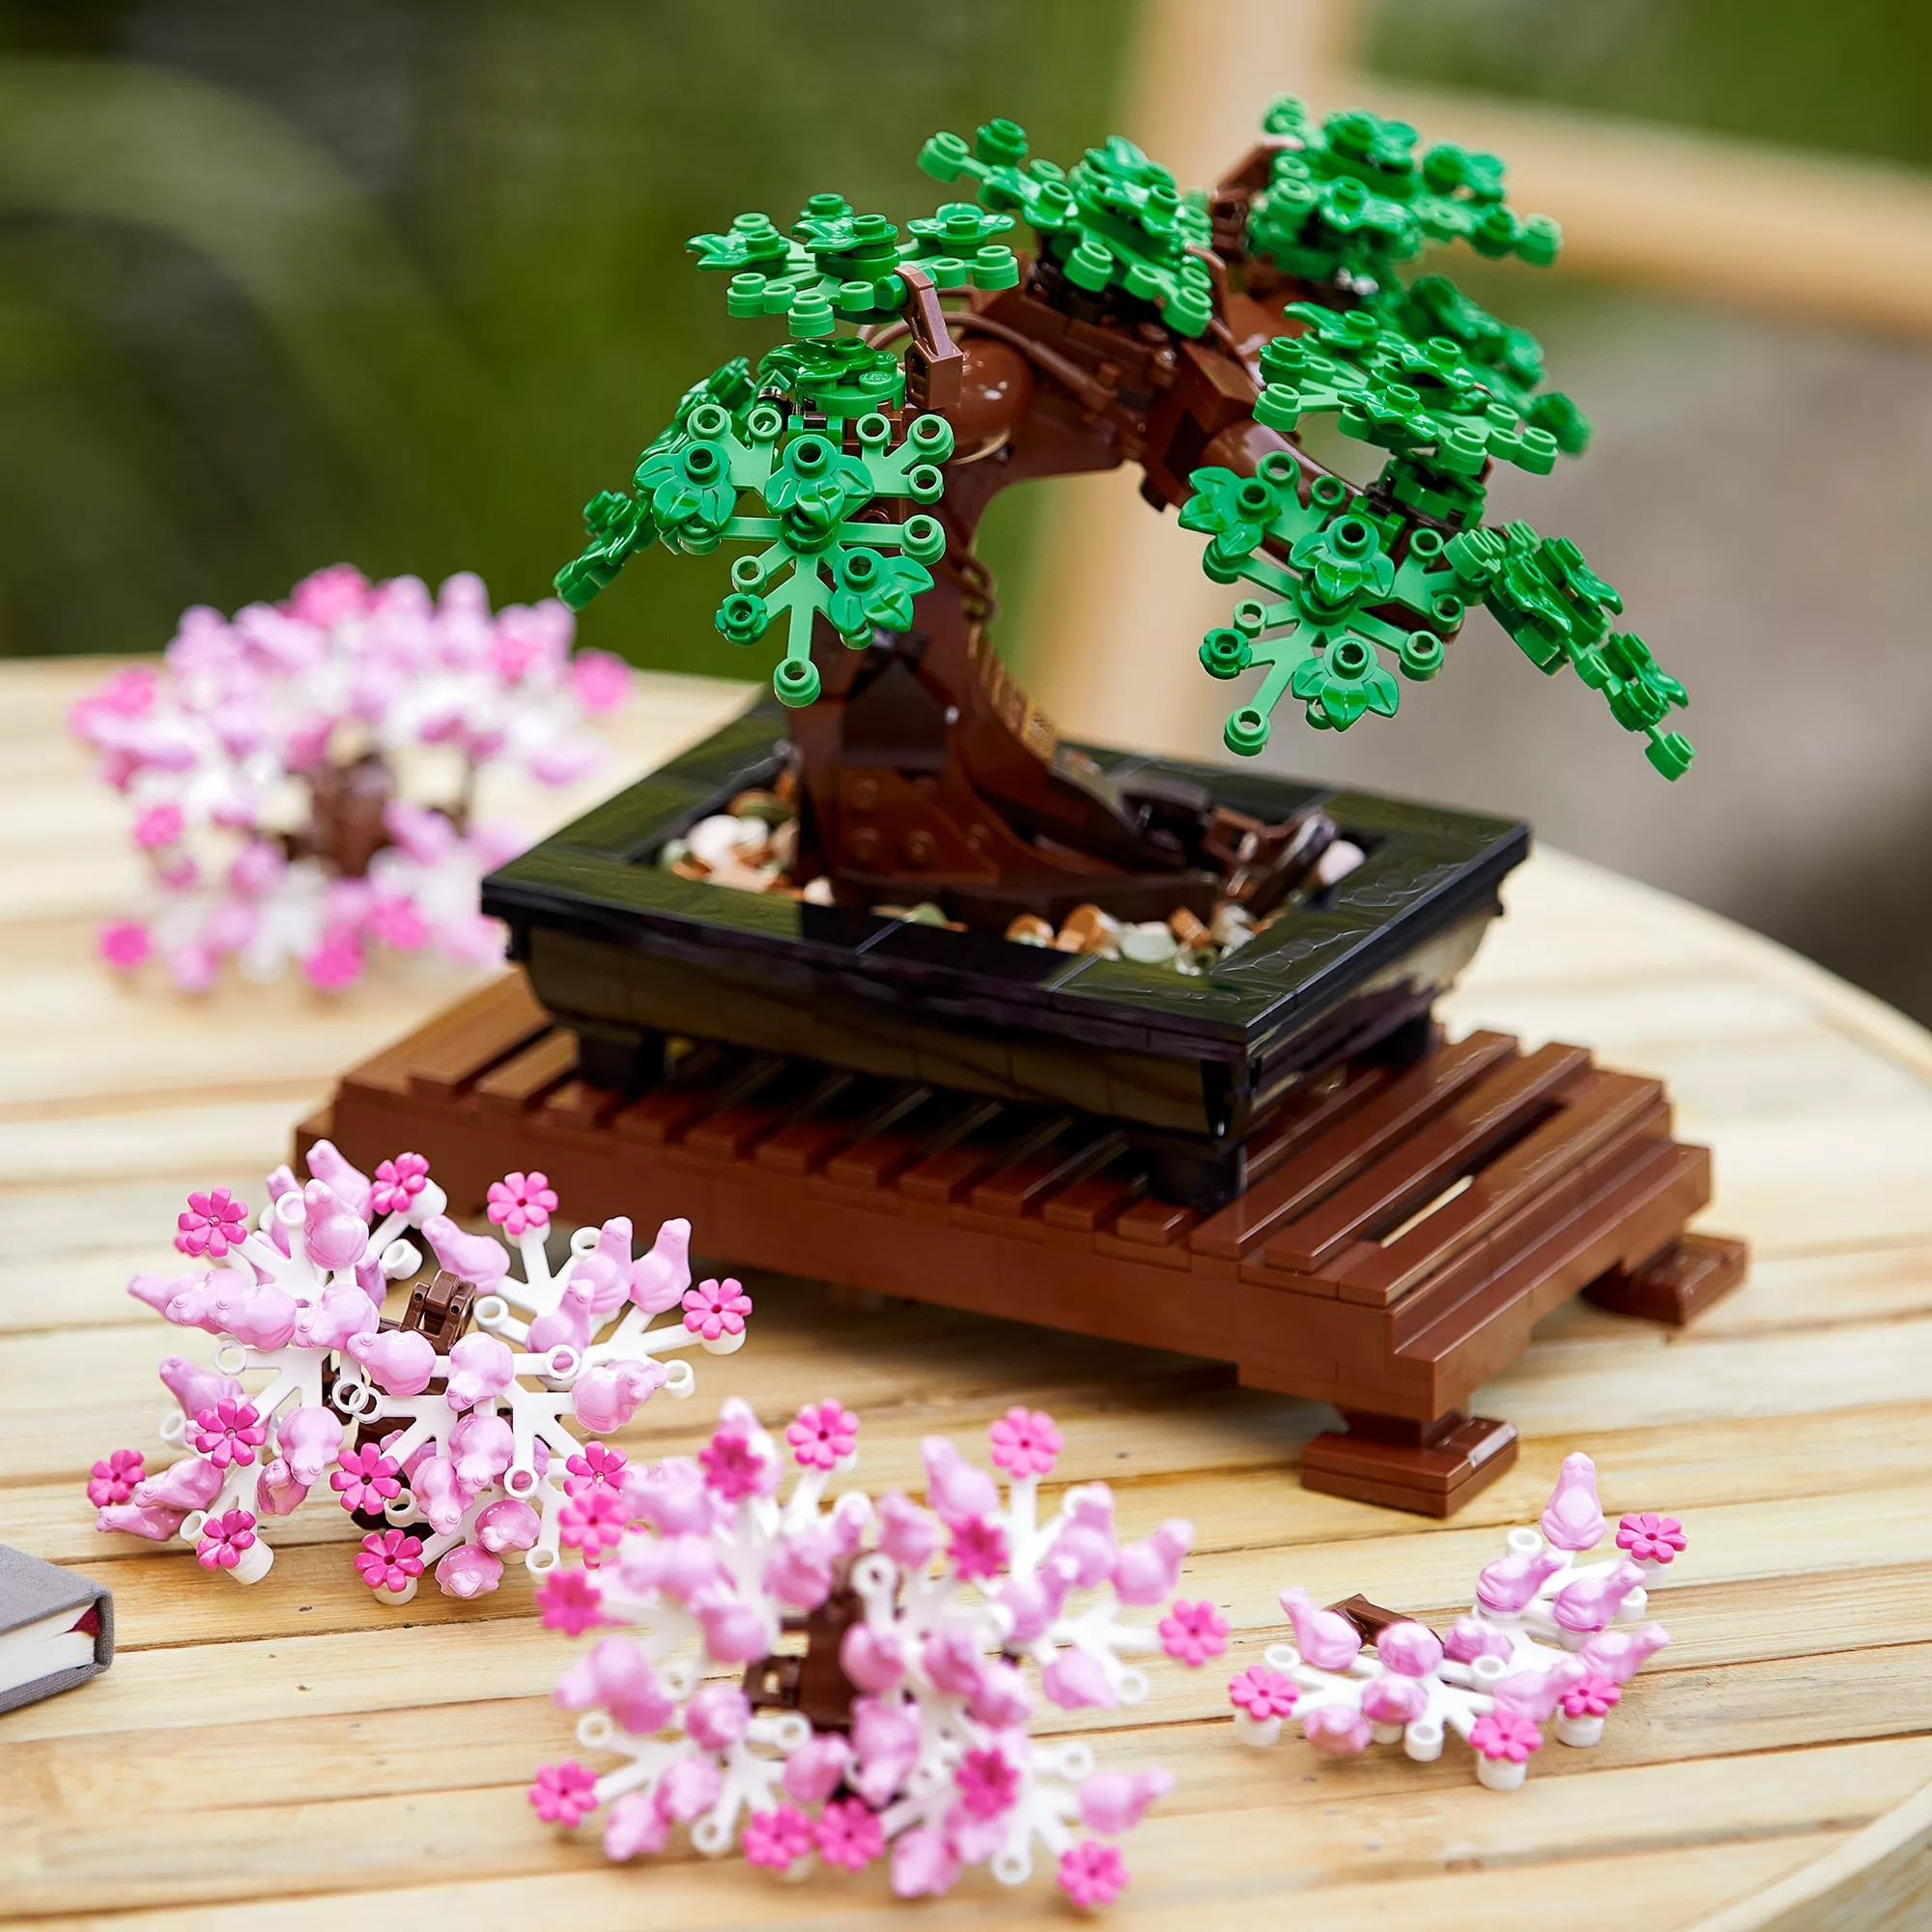 LEGO Creator Expert Bonsai Baum